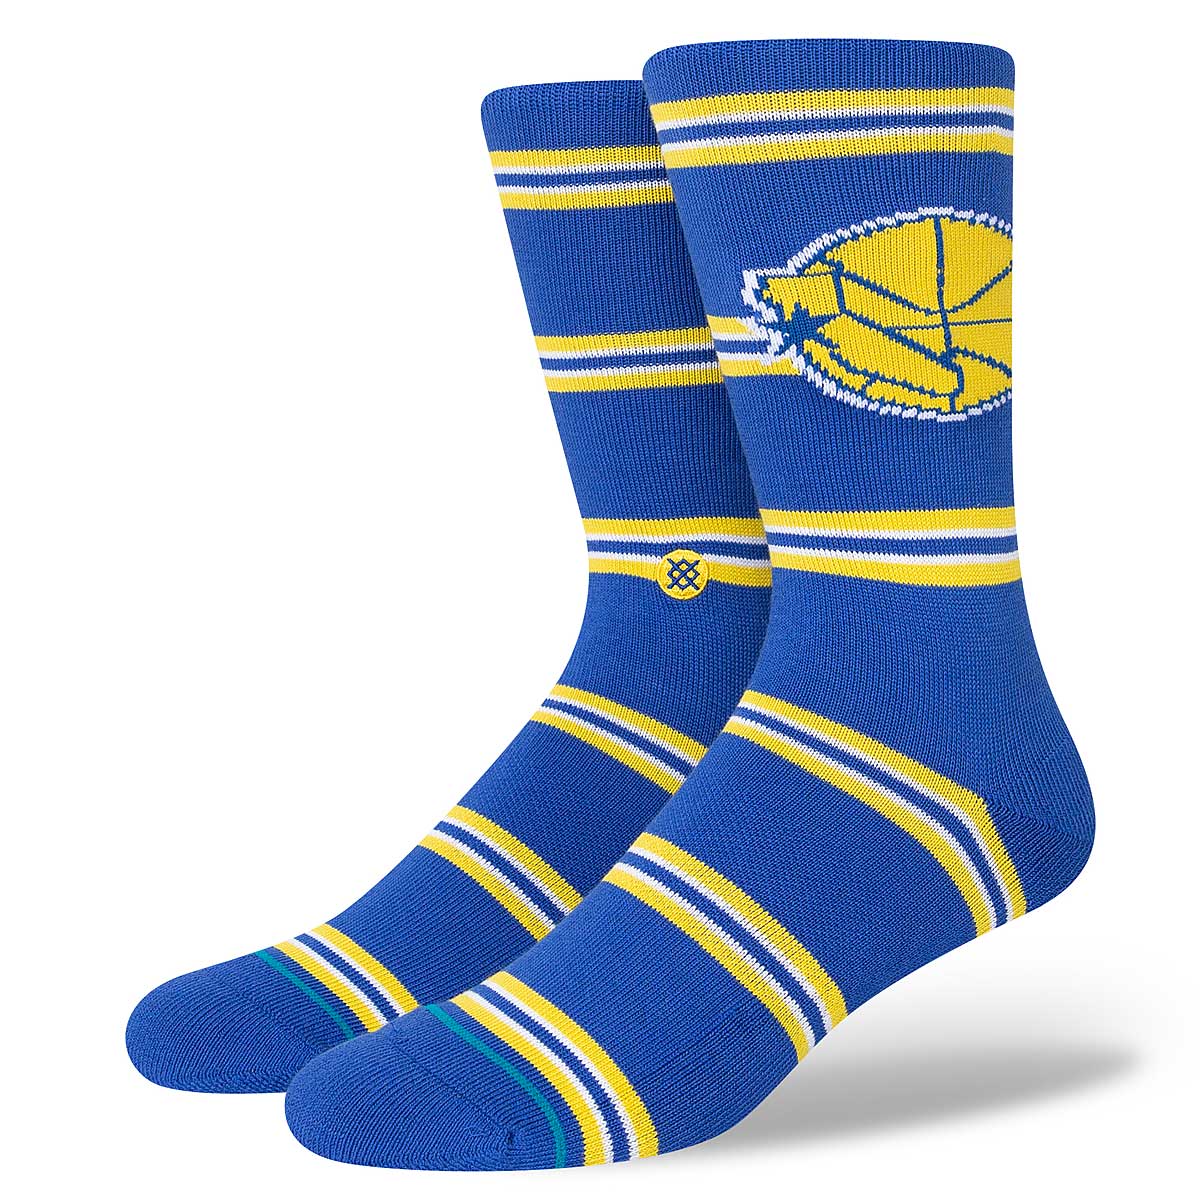 Stance Nba Golden State Warriors Stripe Crew Socks, Blue